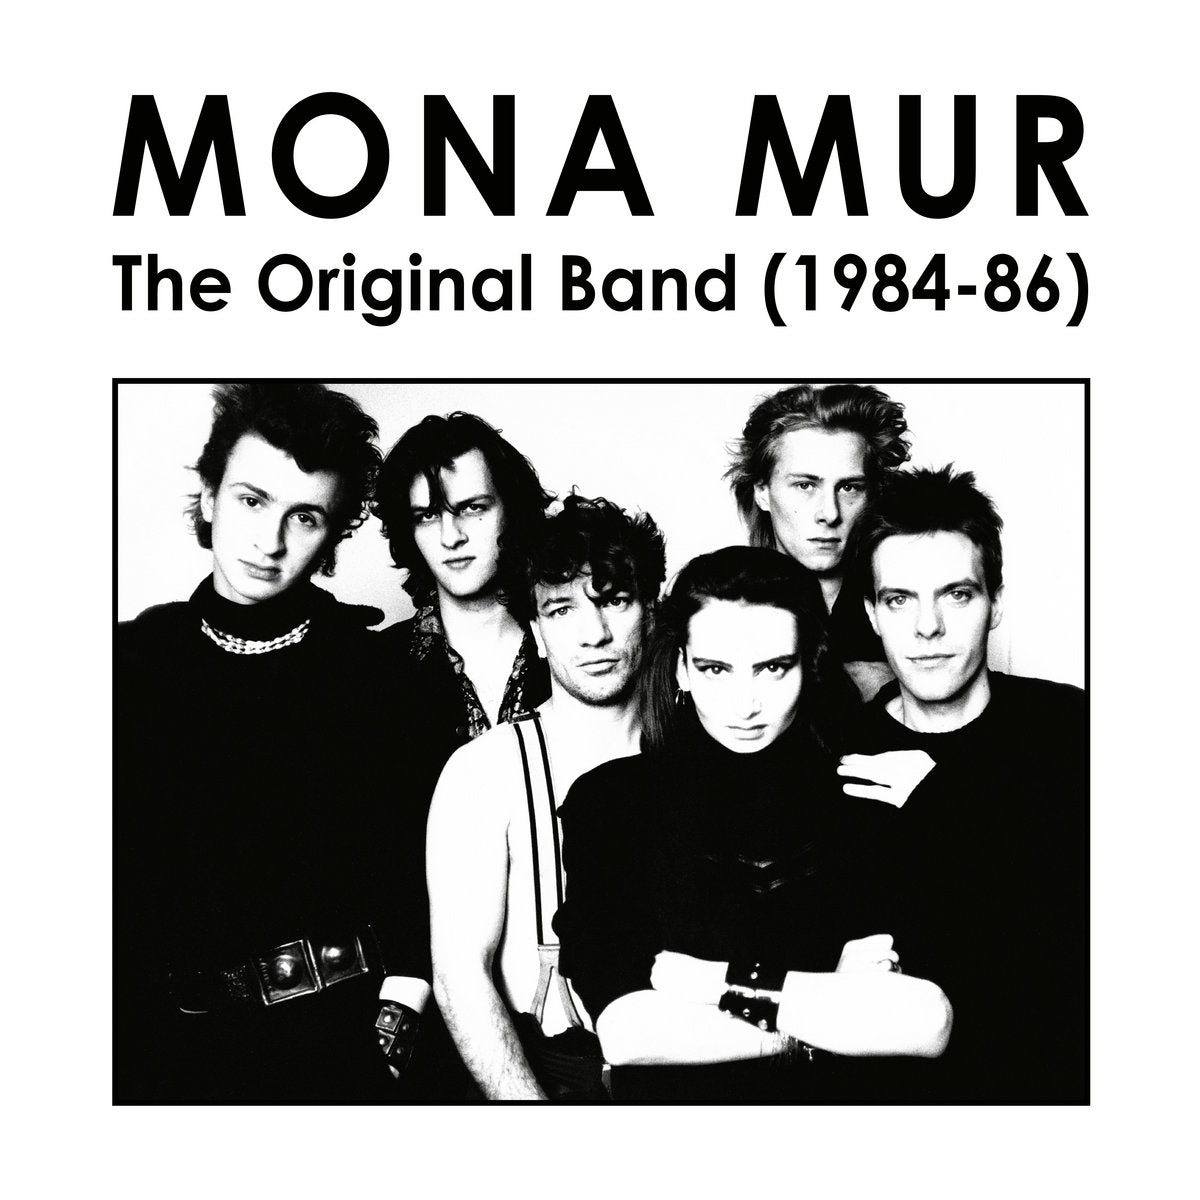 MONA MUR - THE ORIGINAL BAND (1984-86) Vinyl LP